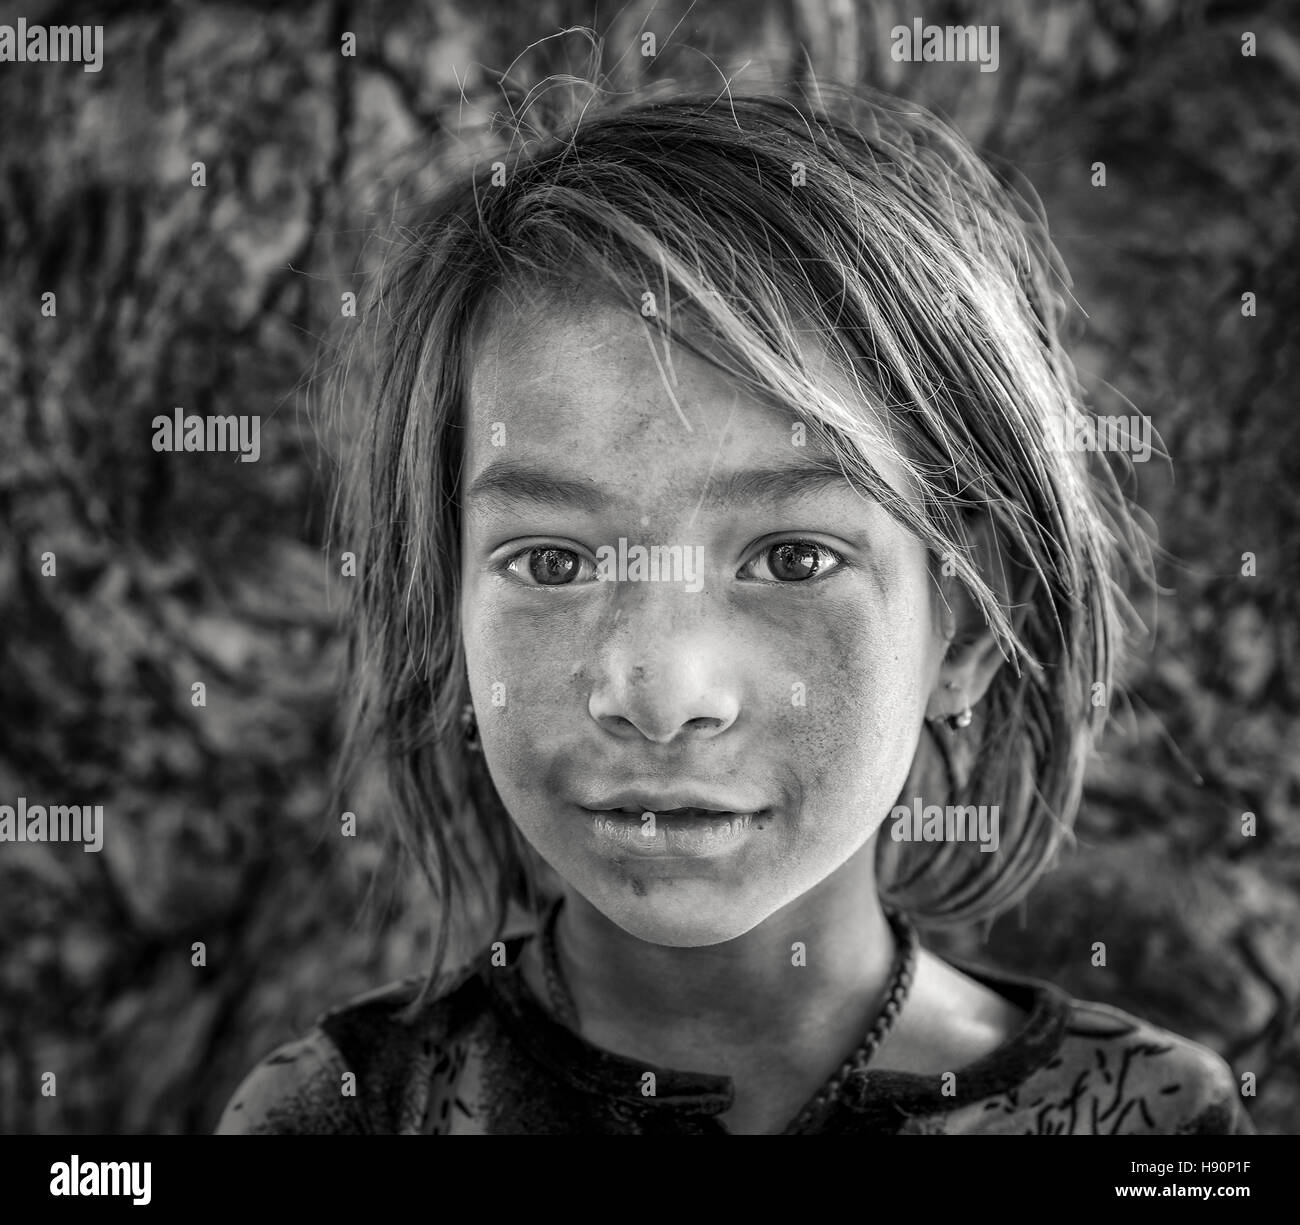 Child living on the street, Jodhpur, Rajasthan, India Stock Photo